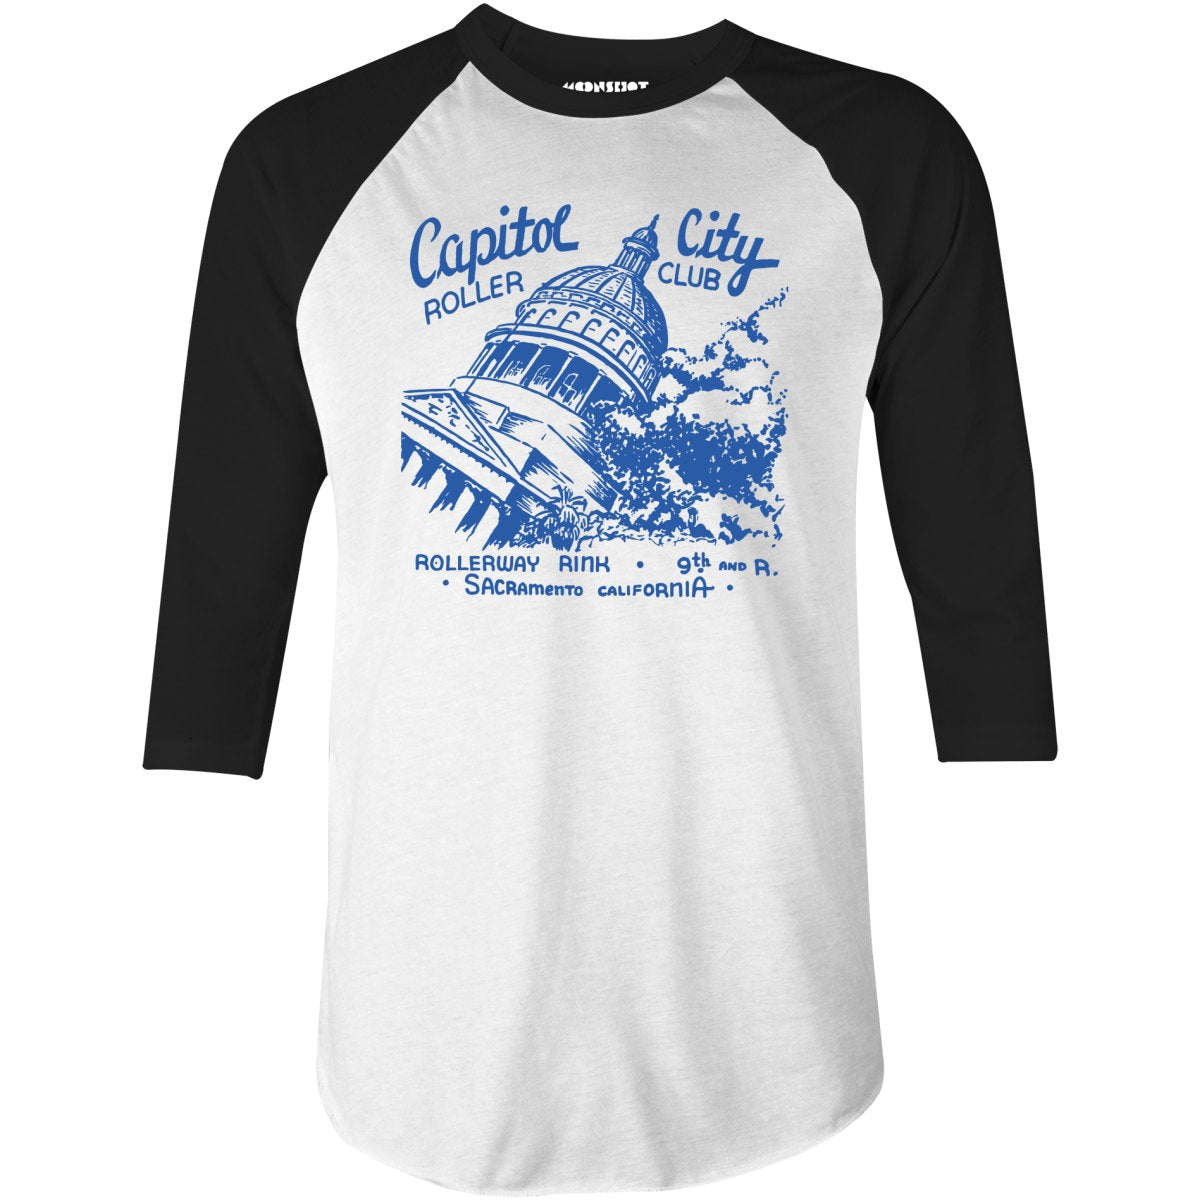 Capitol City Roller Club - Sacramento, CA - Vintage Roller Rink - 3/4 Sleeve Raglan T-Shirt